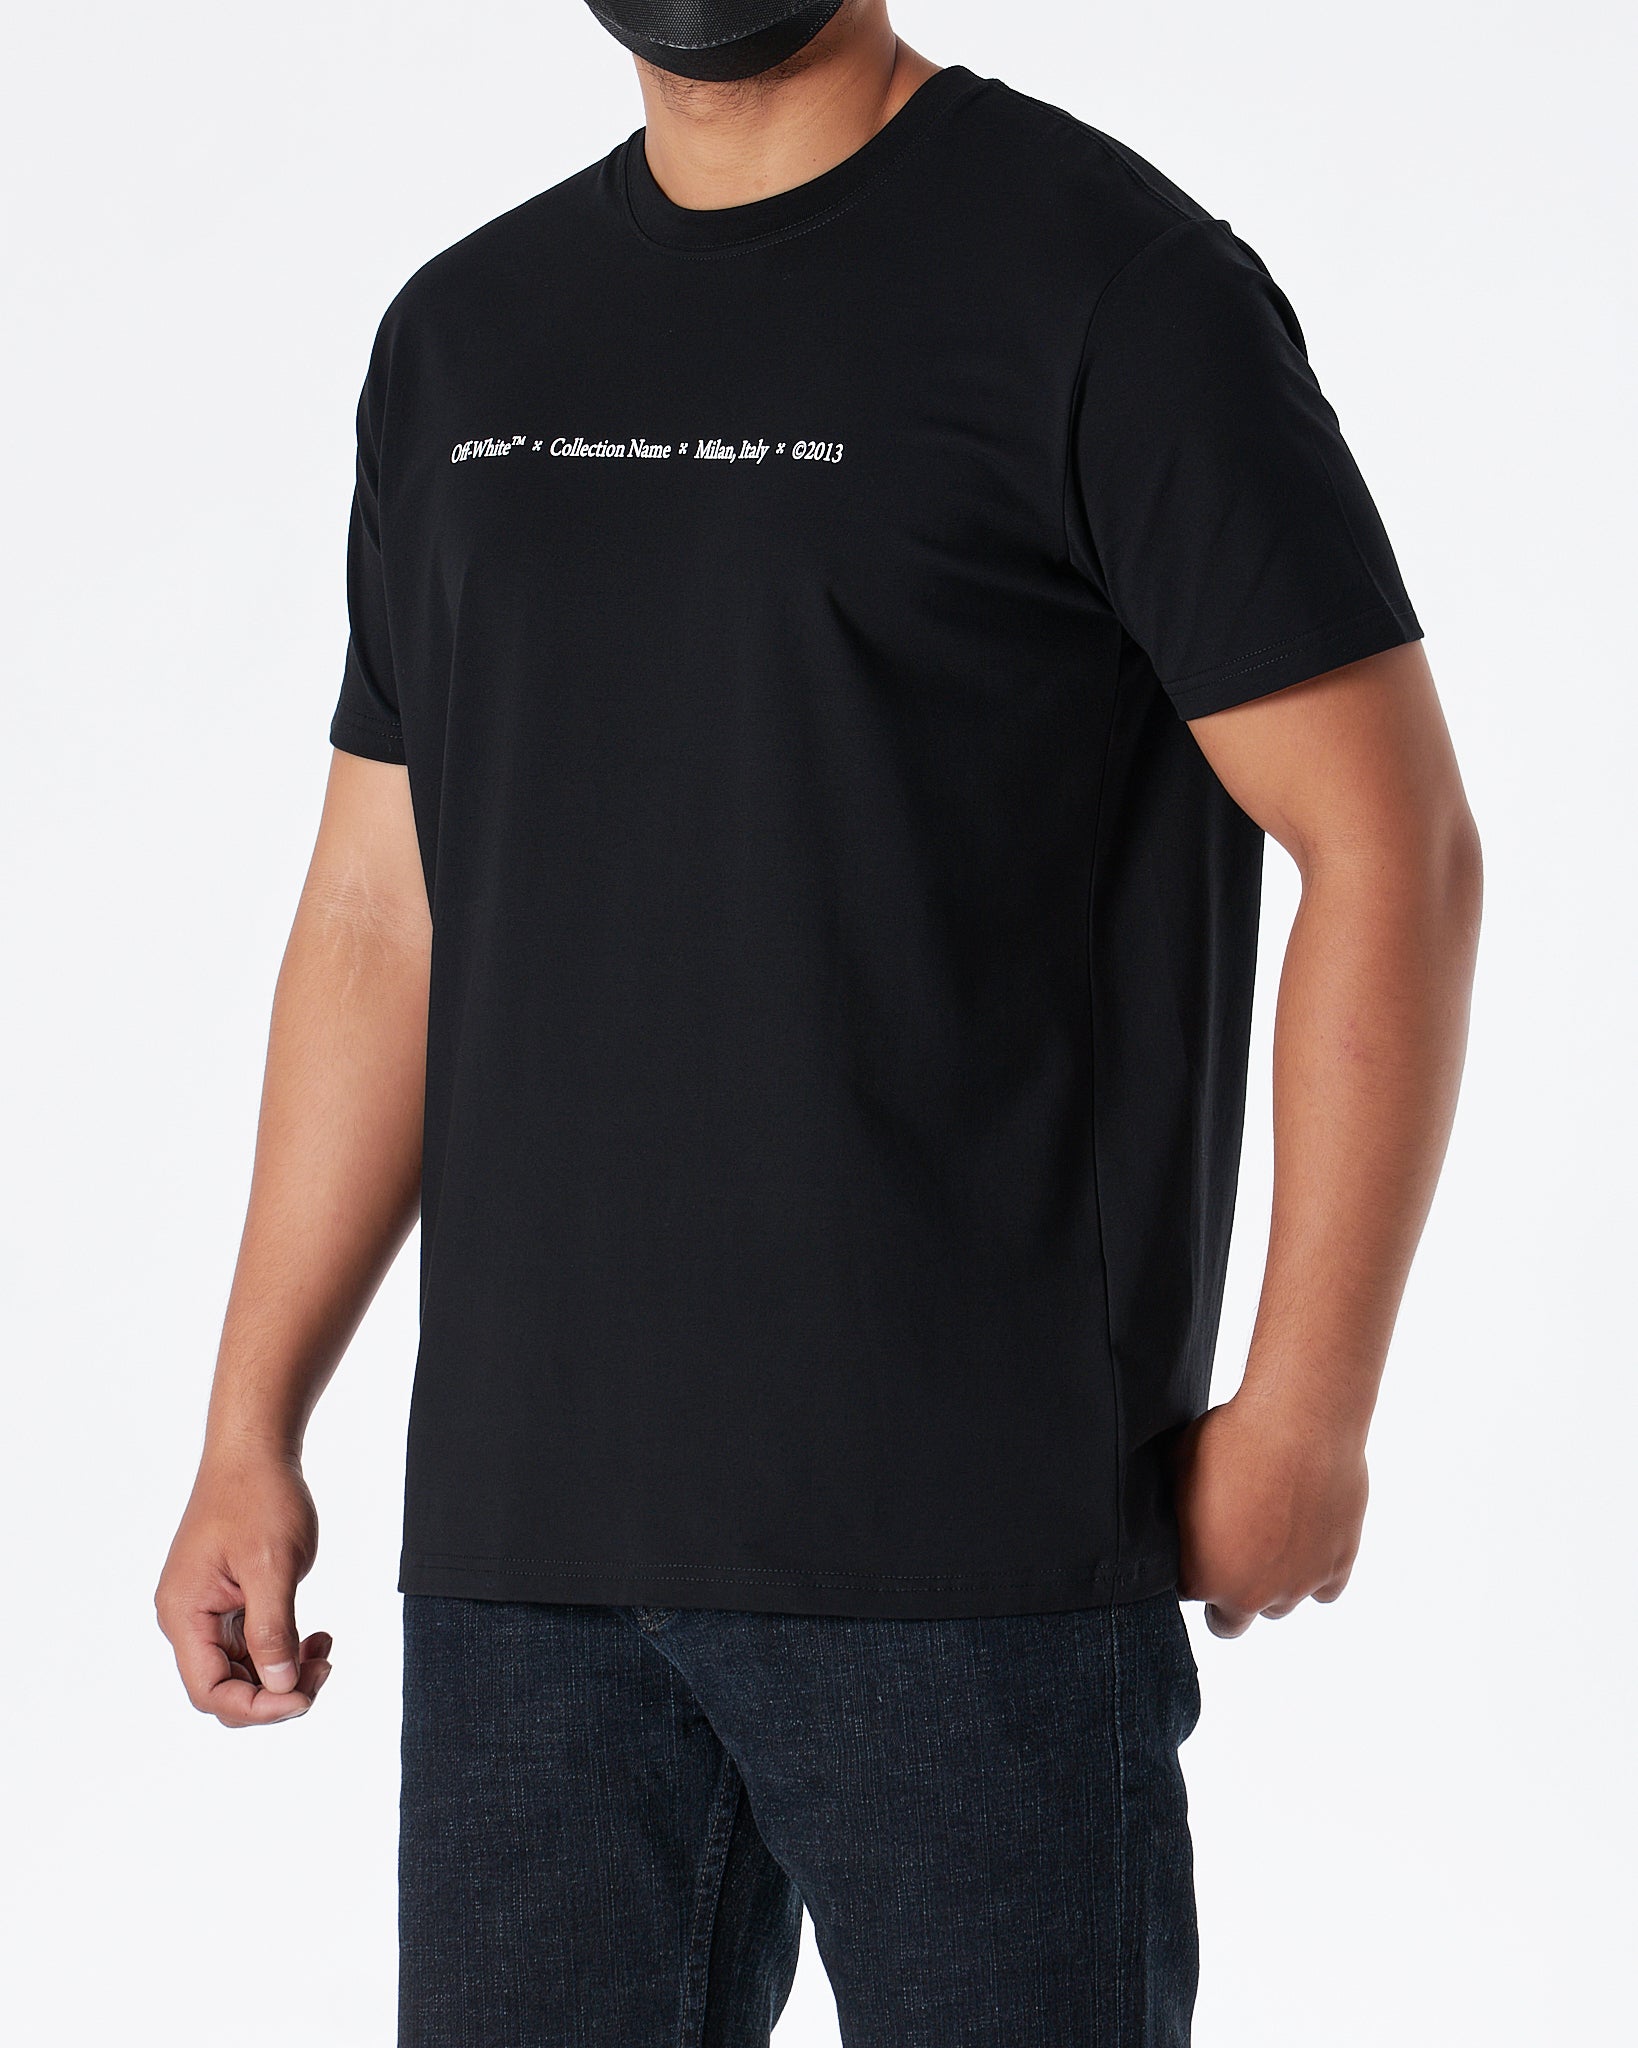 MOI OUTFIT-Cross Back Green Arrow Printed Men T-Shirt 17.90